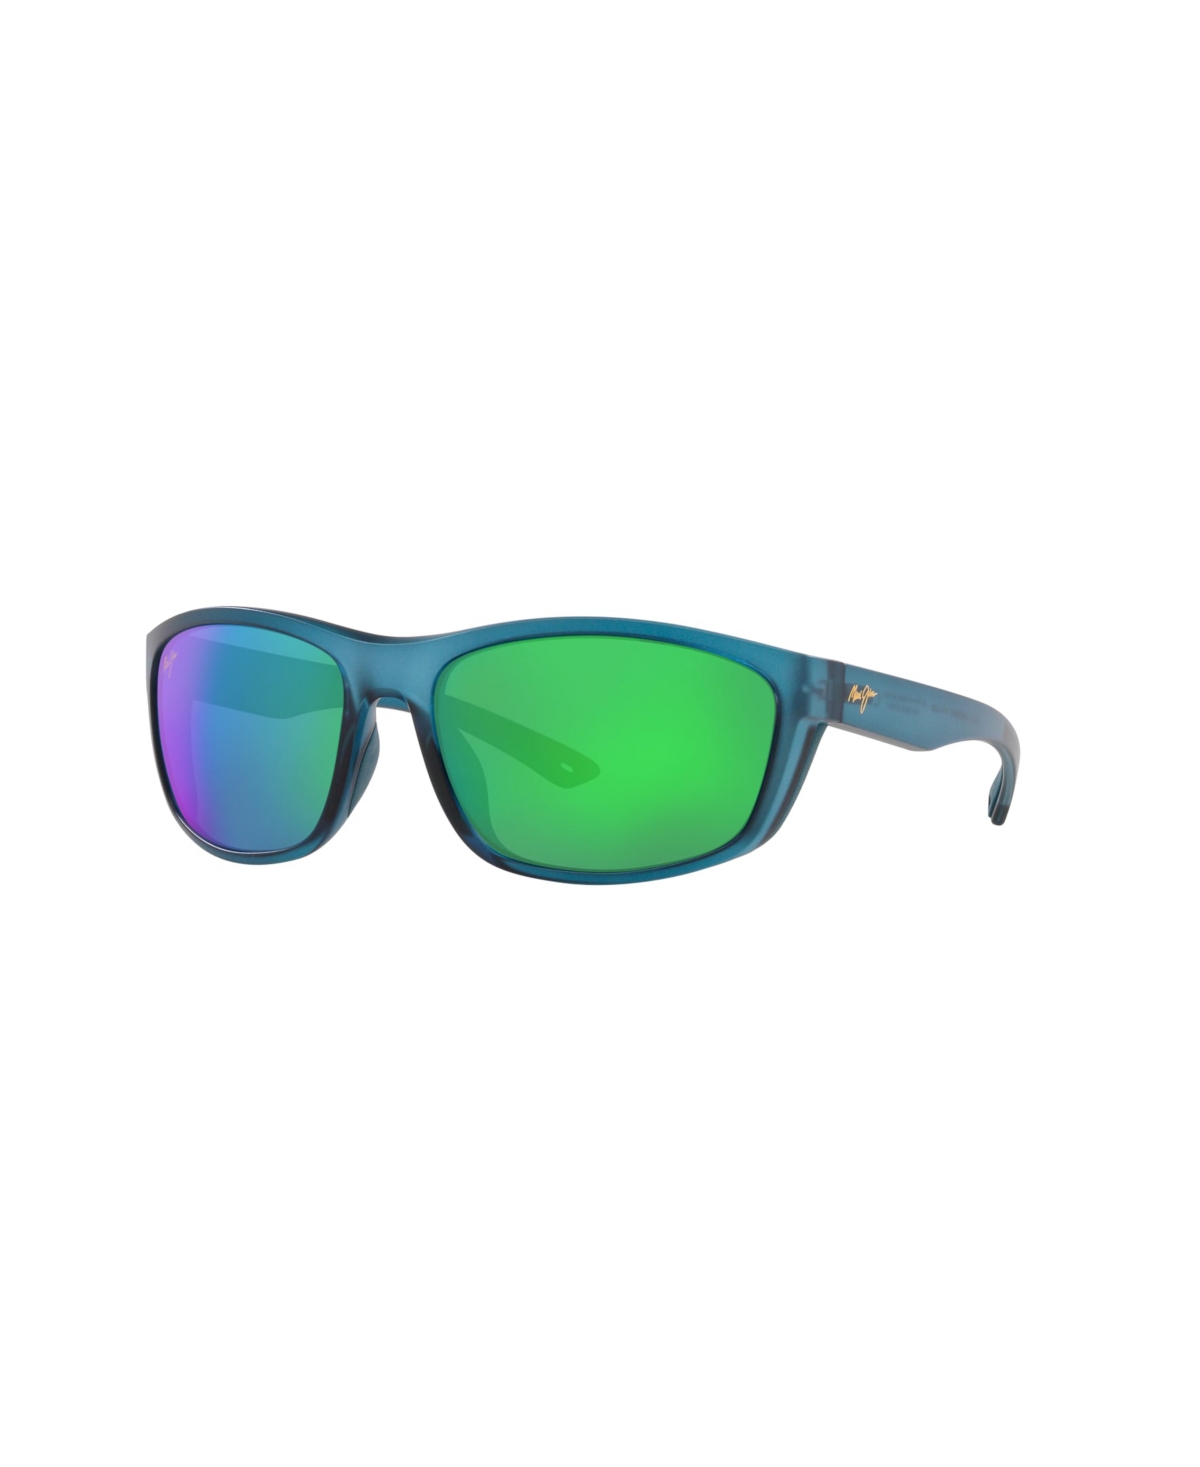 Maui Jim Unisex Polarized Sunglasses, Nuu Landing Mj000735 In Blue Green